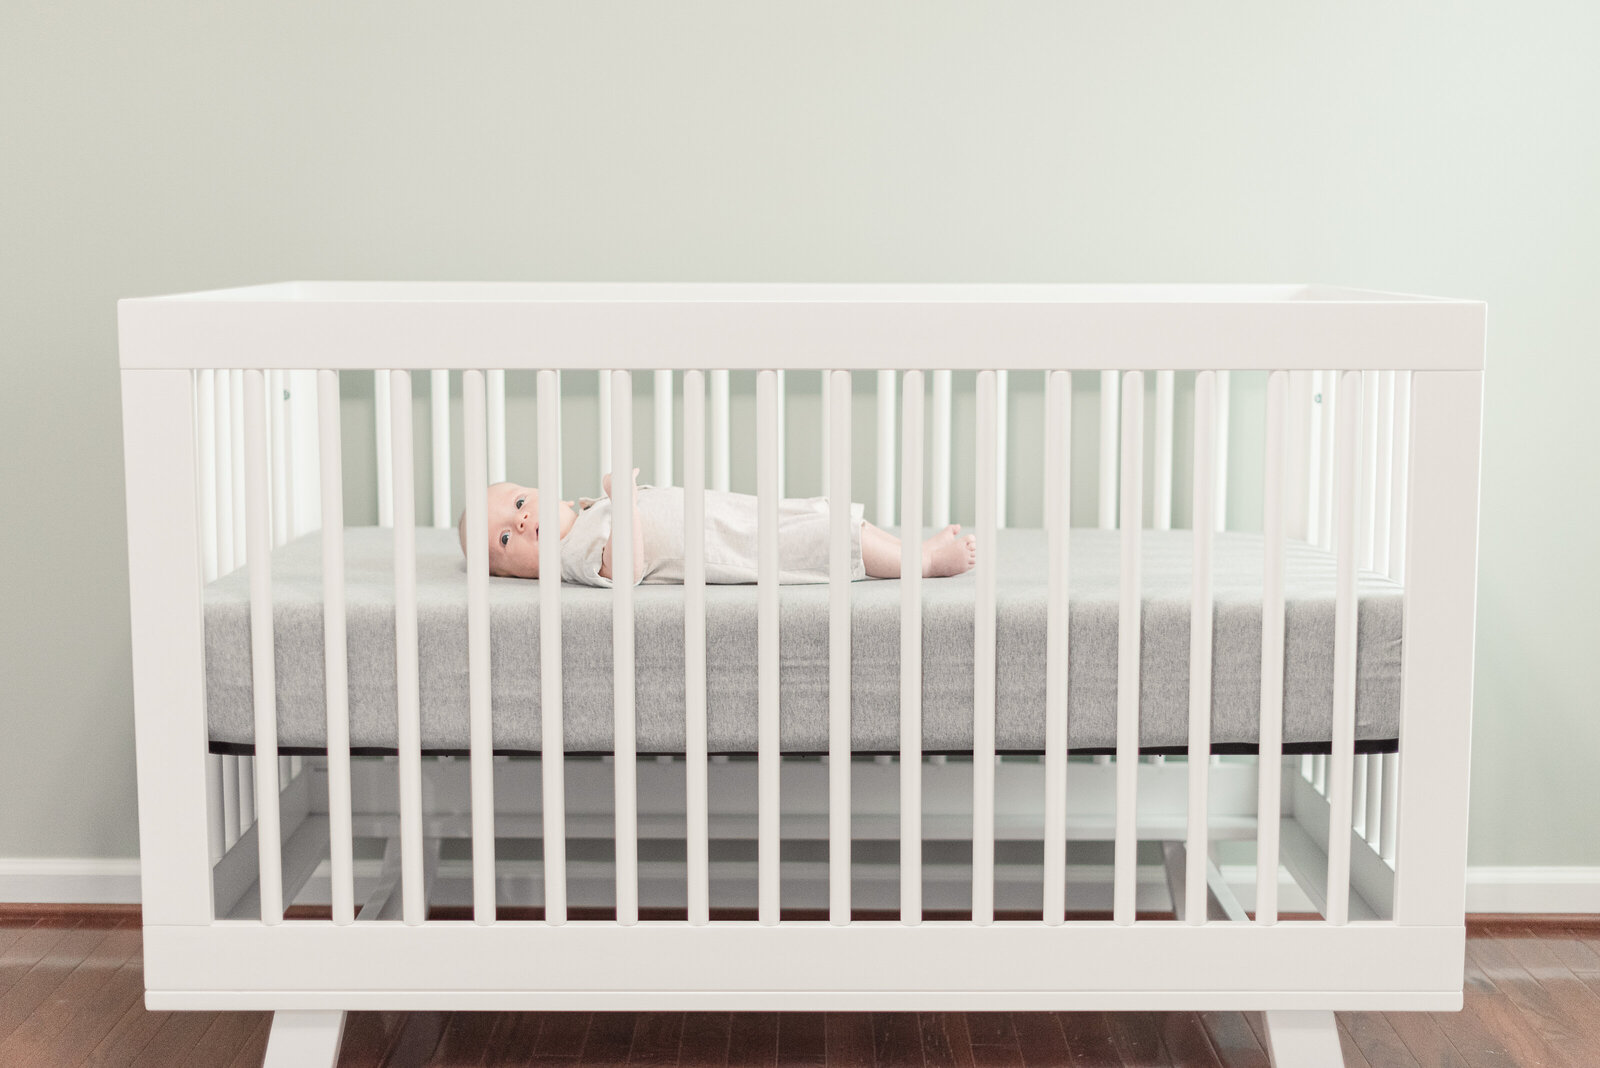 View of newborn Laying in crib in nursery